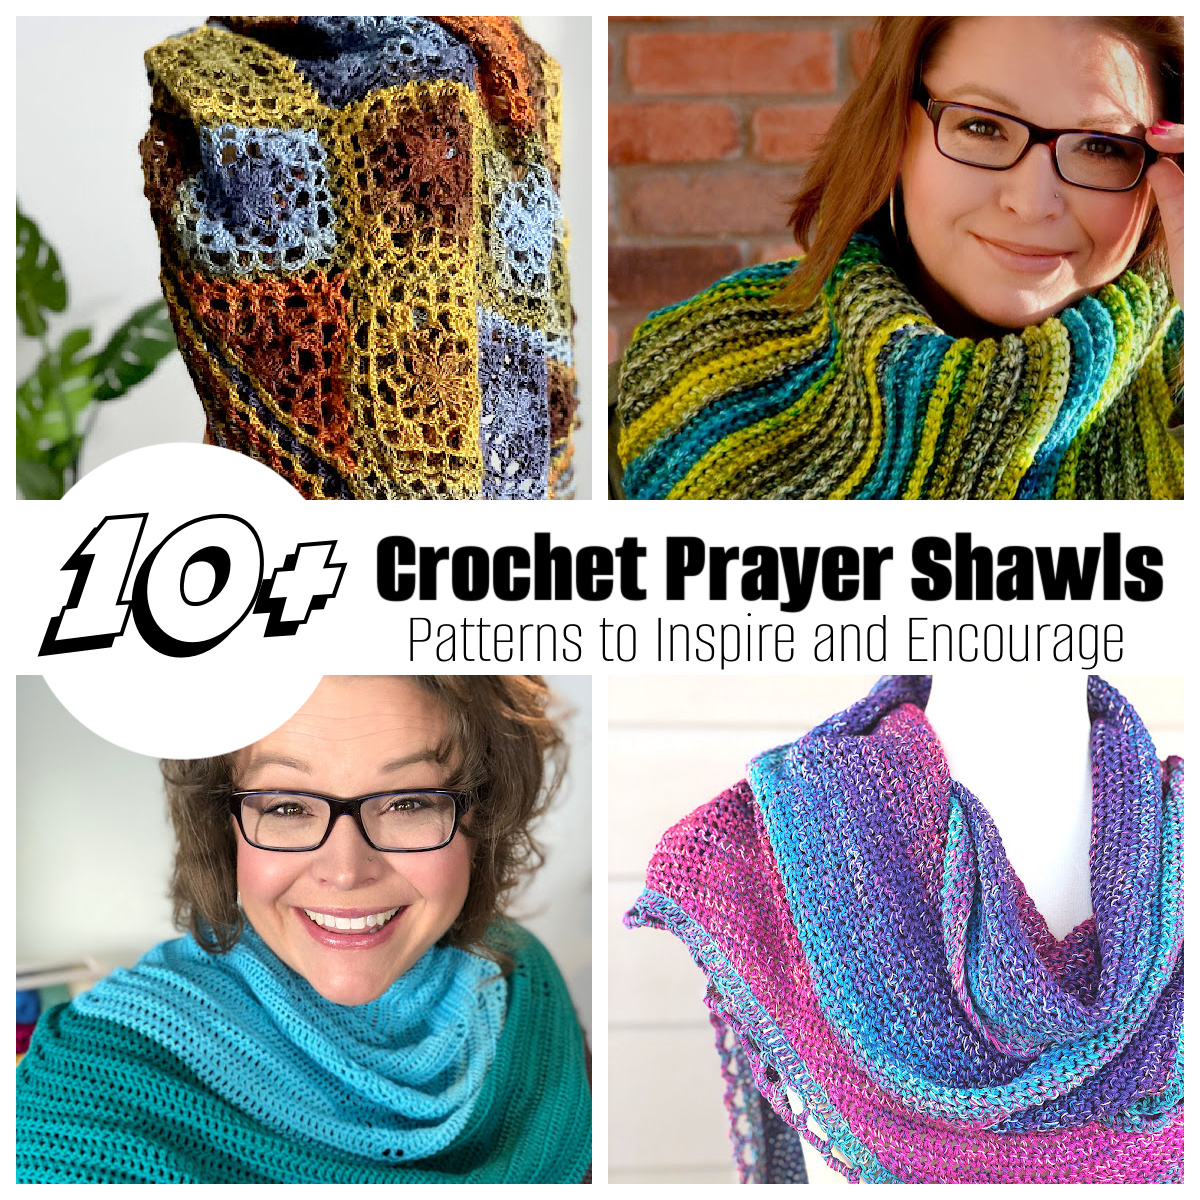 Crochet An Oversized Chunky Blanket Scarf … Love It! Maybe